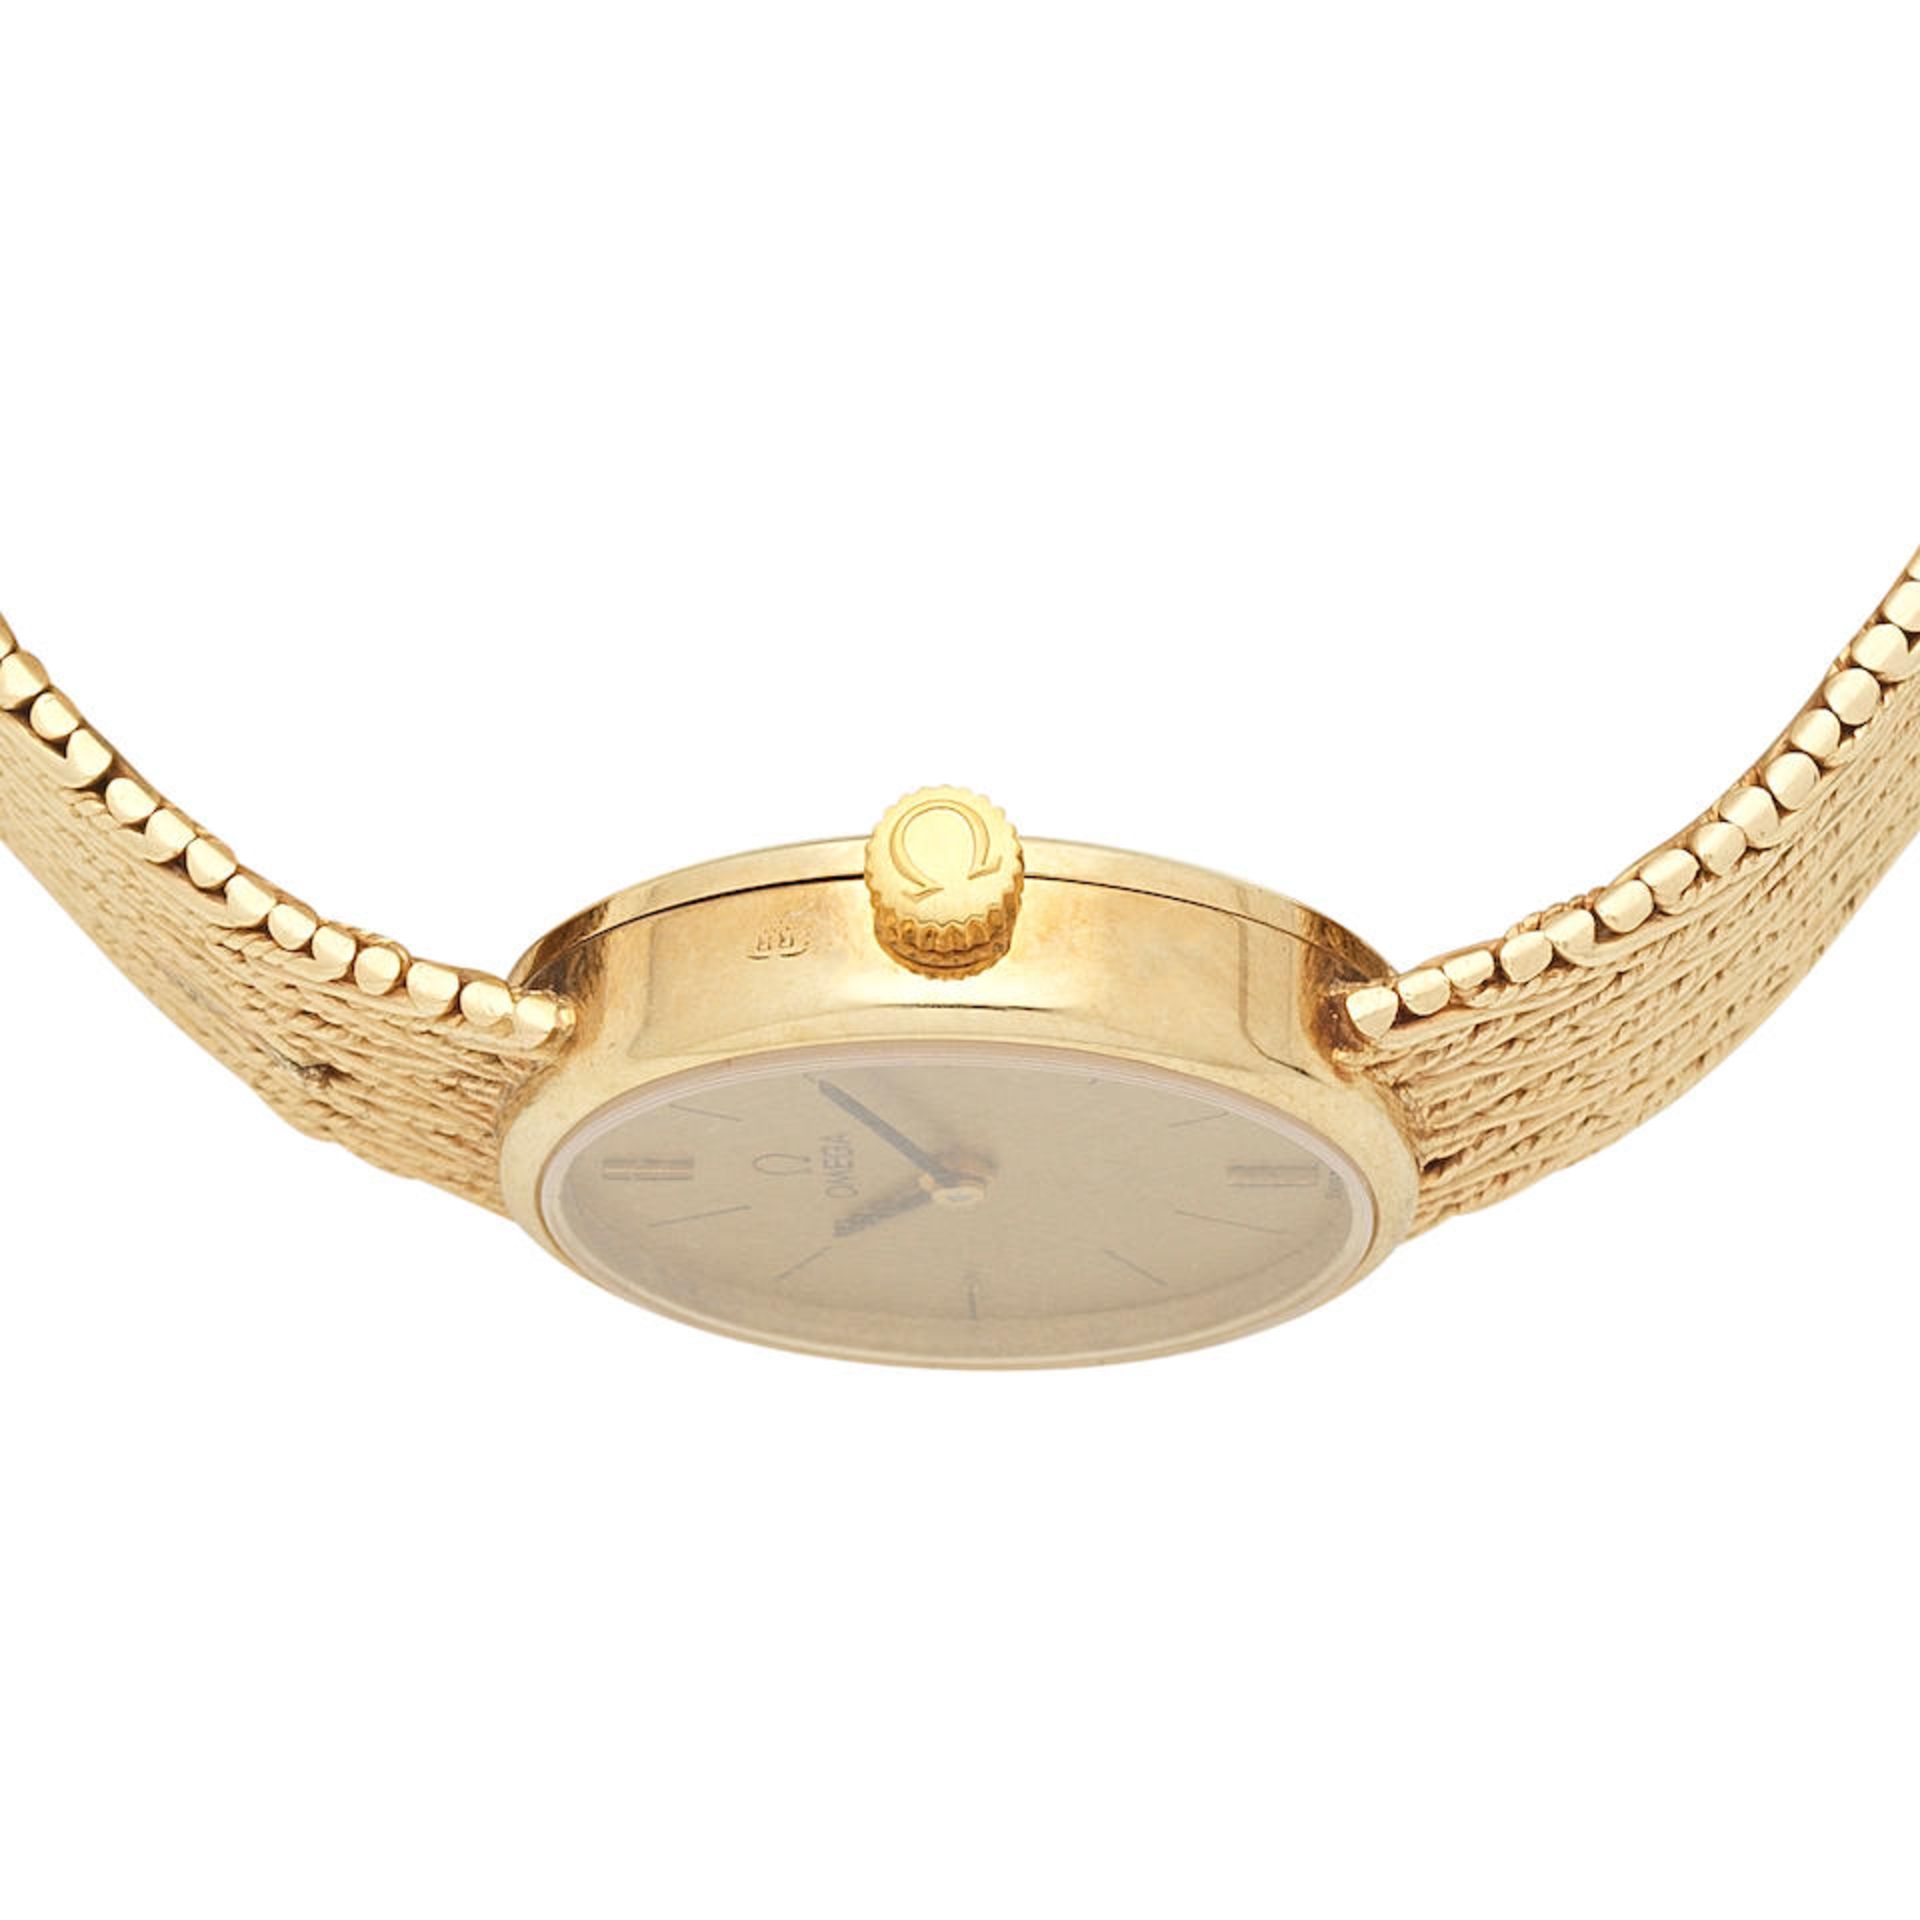 Omega. A lady's 14K gold manual wind bracelet watch Circa 1978 - Image 3 of 4